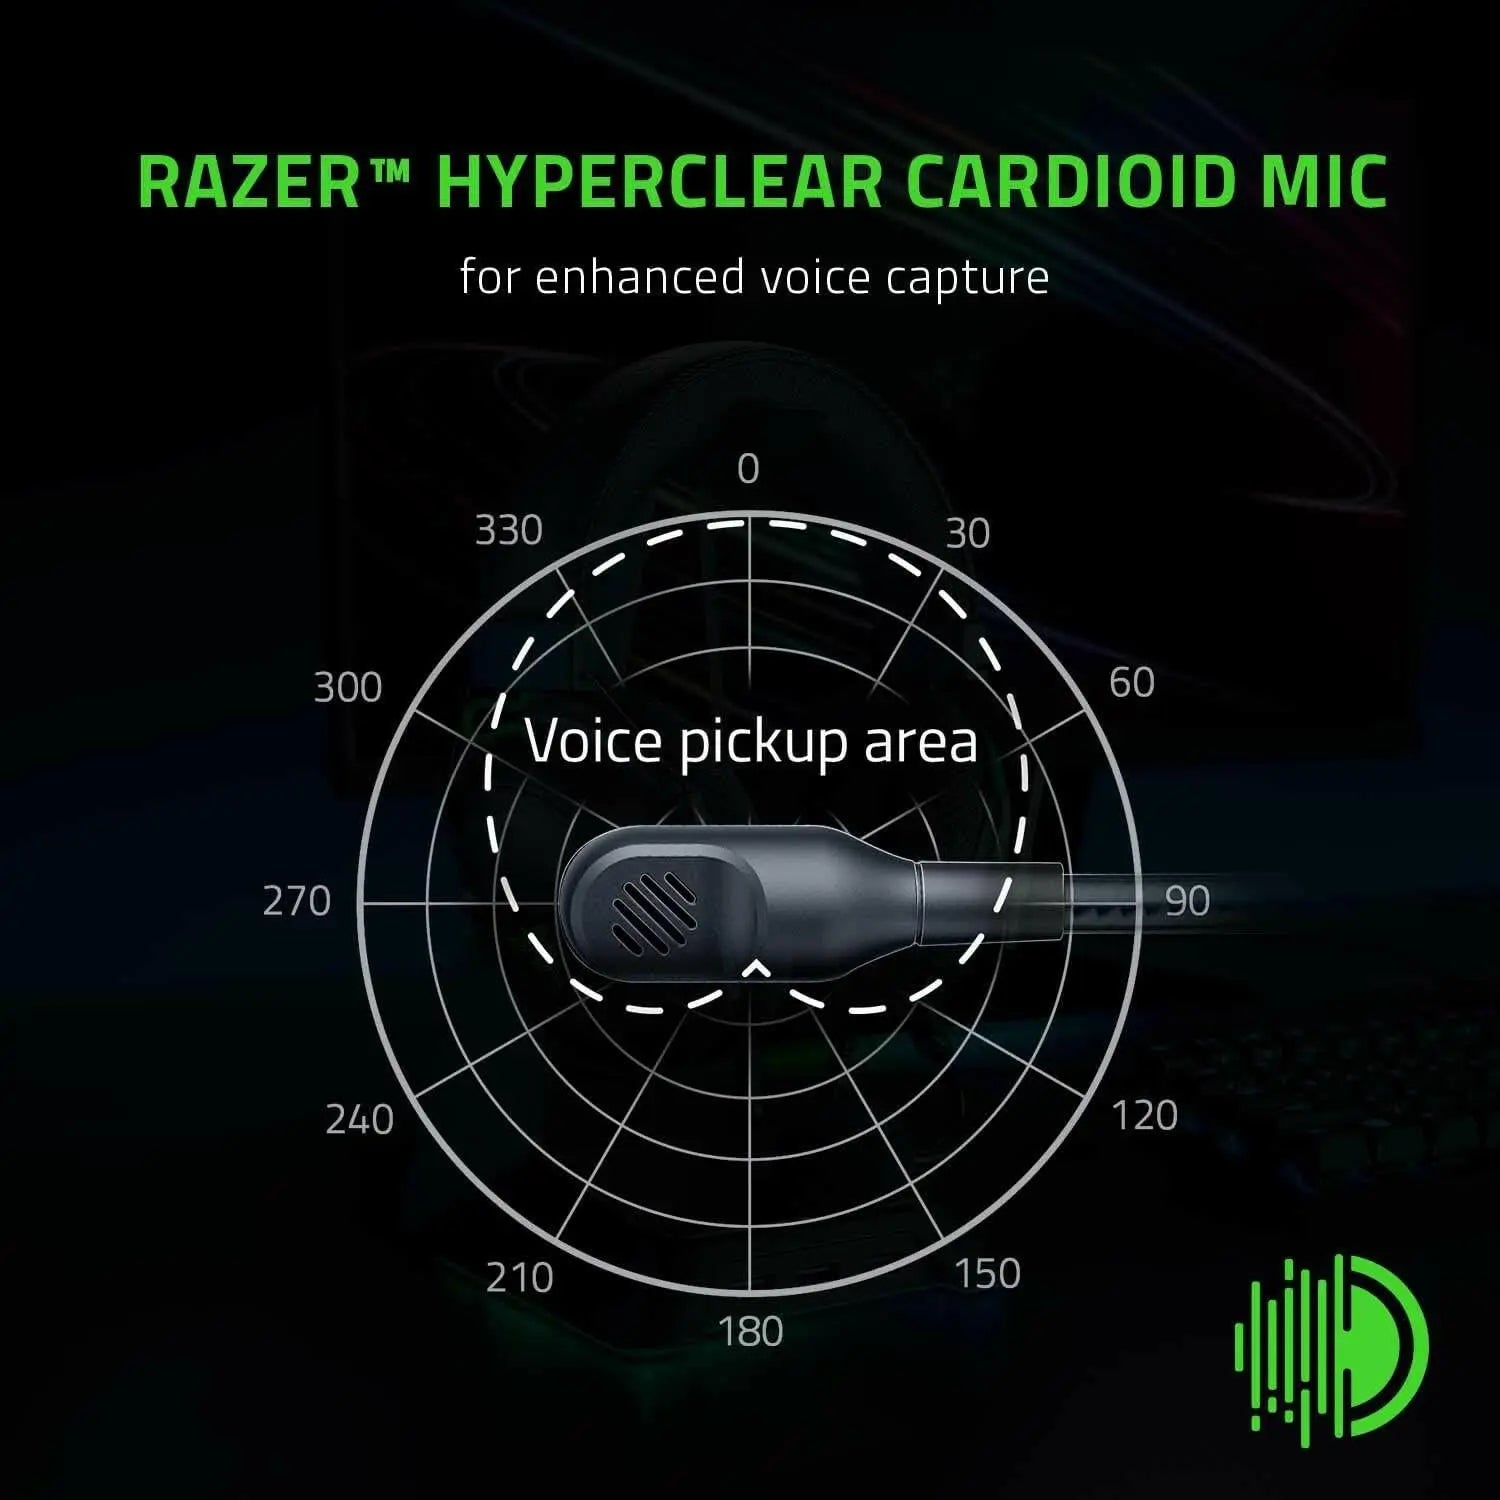 Razer BlackShark V2 X Gaming Headset: 7.1 Surround Sound, 50mm Drivers, Memory Foam Cushion, for PC, PS4, PS5, Switch, Xbox One, Xbox Series X|S